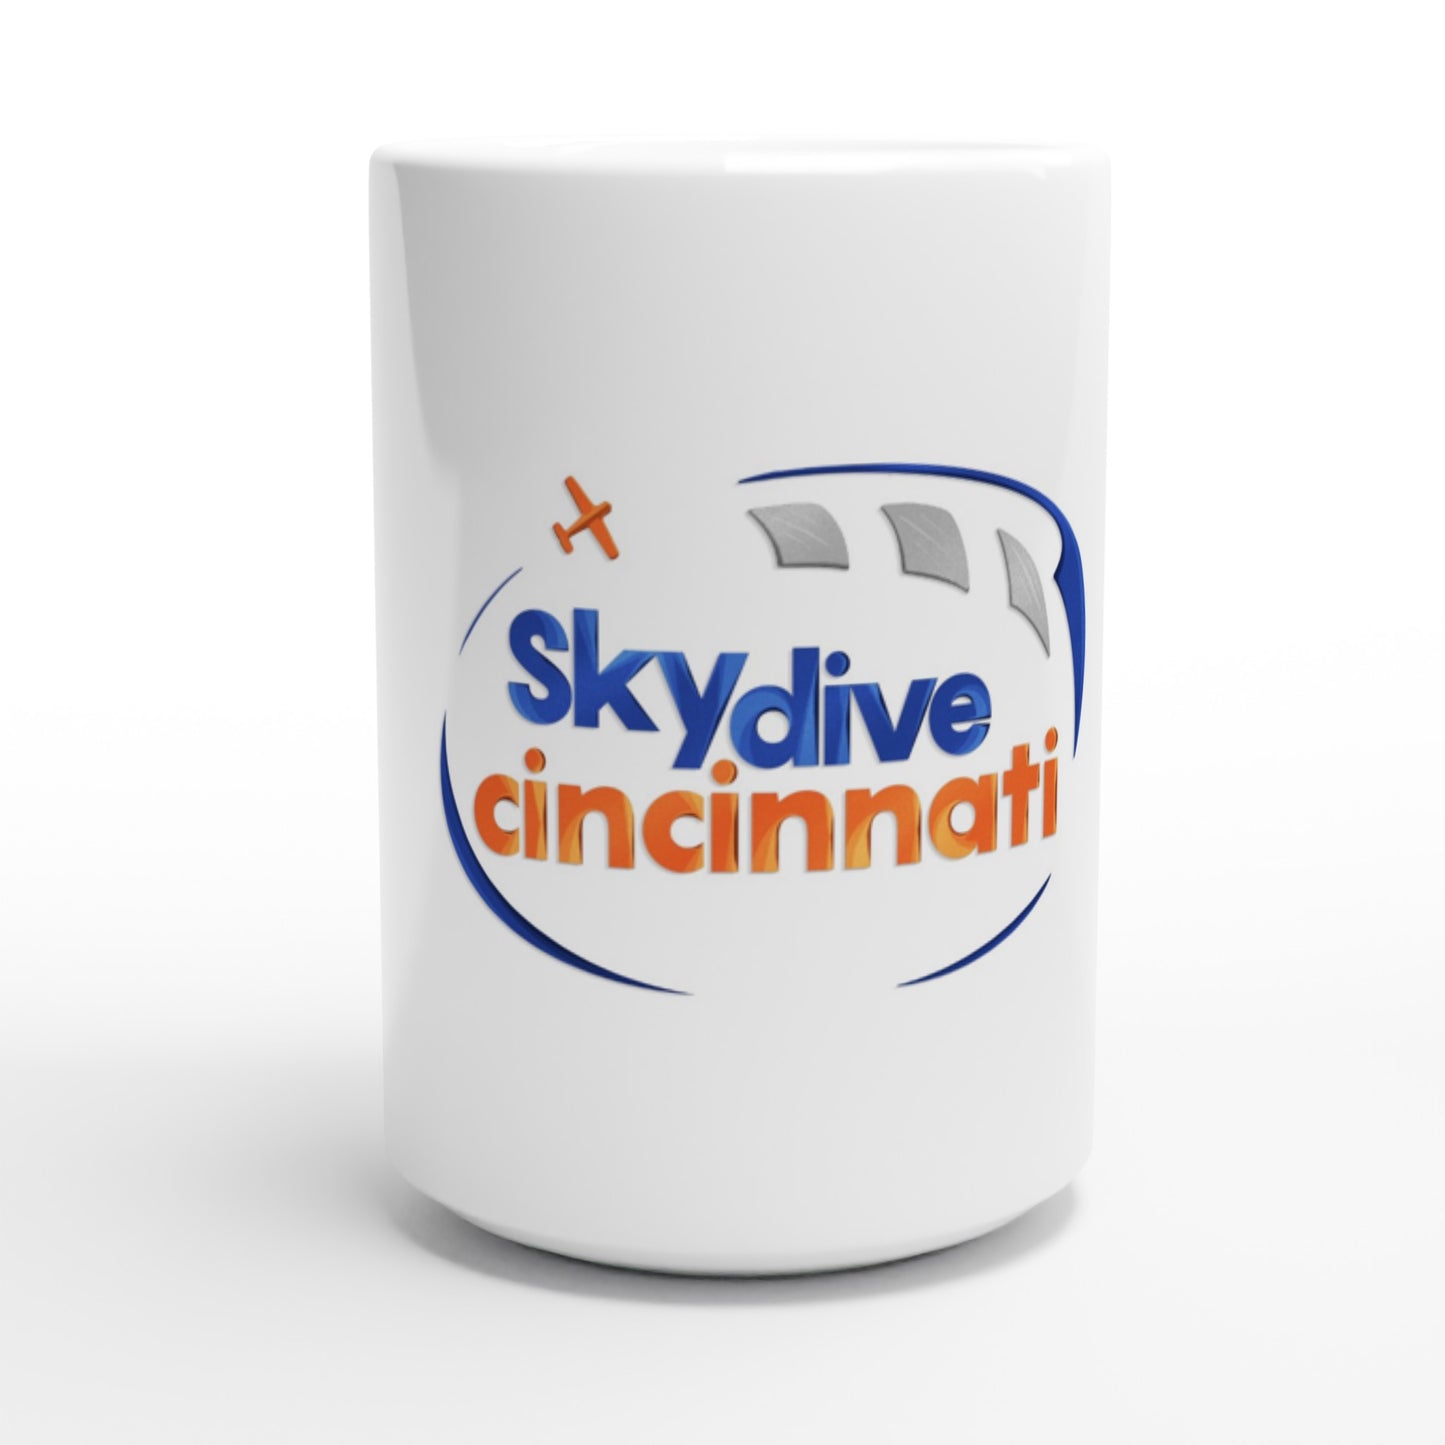 Skydive Cincinnati - White 15oz Ceramic Mug